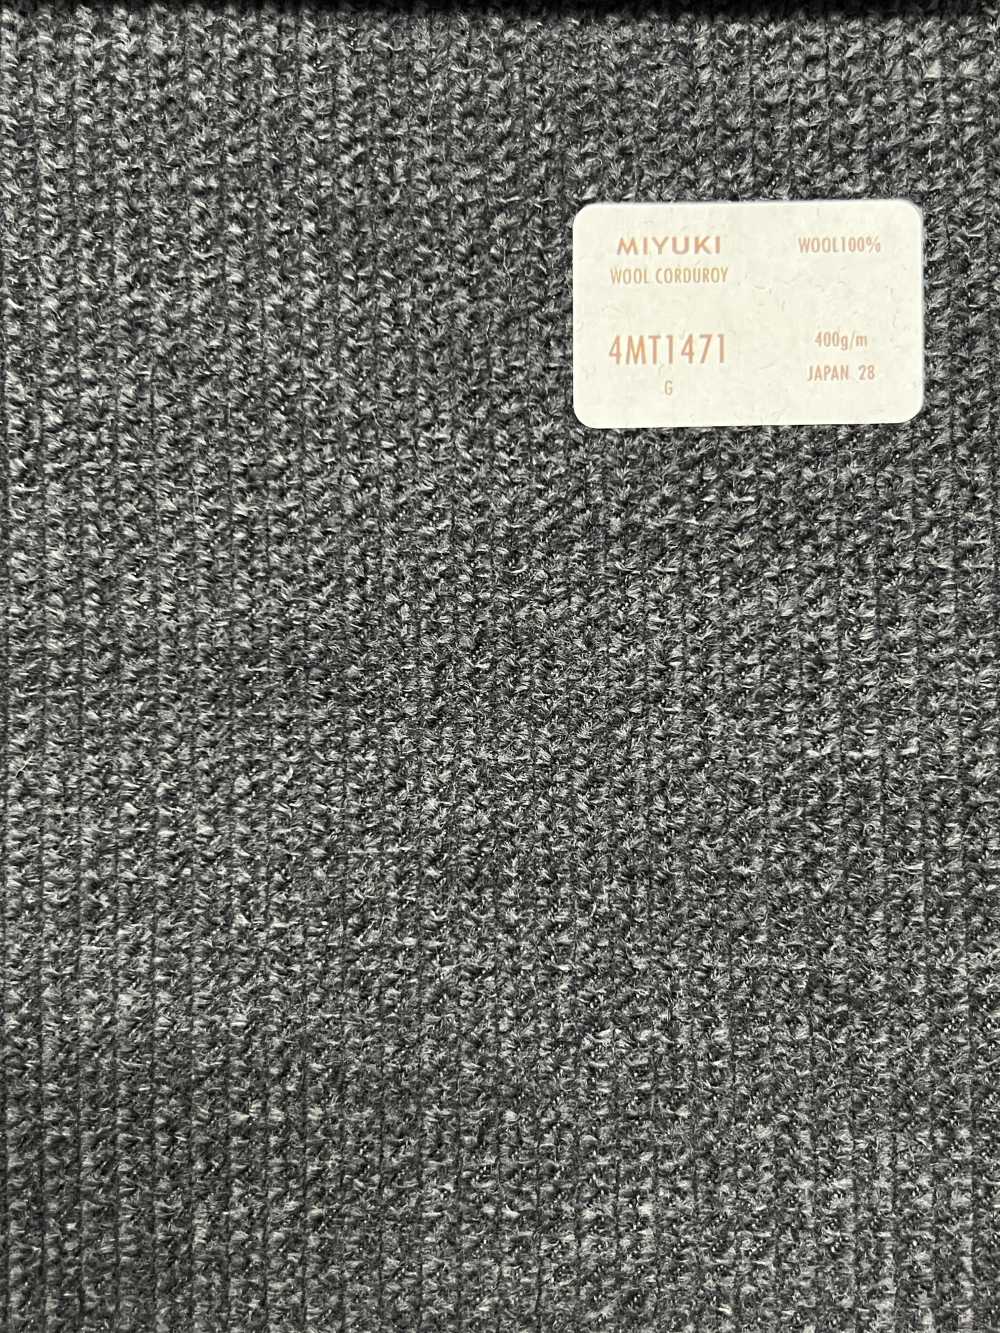 4MT1471 COMFORT LINE AIRFLY WOOL CORDUROY Charcoal Heaven Gray[Textile] Miyuki Keori (Miyuki)